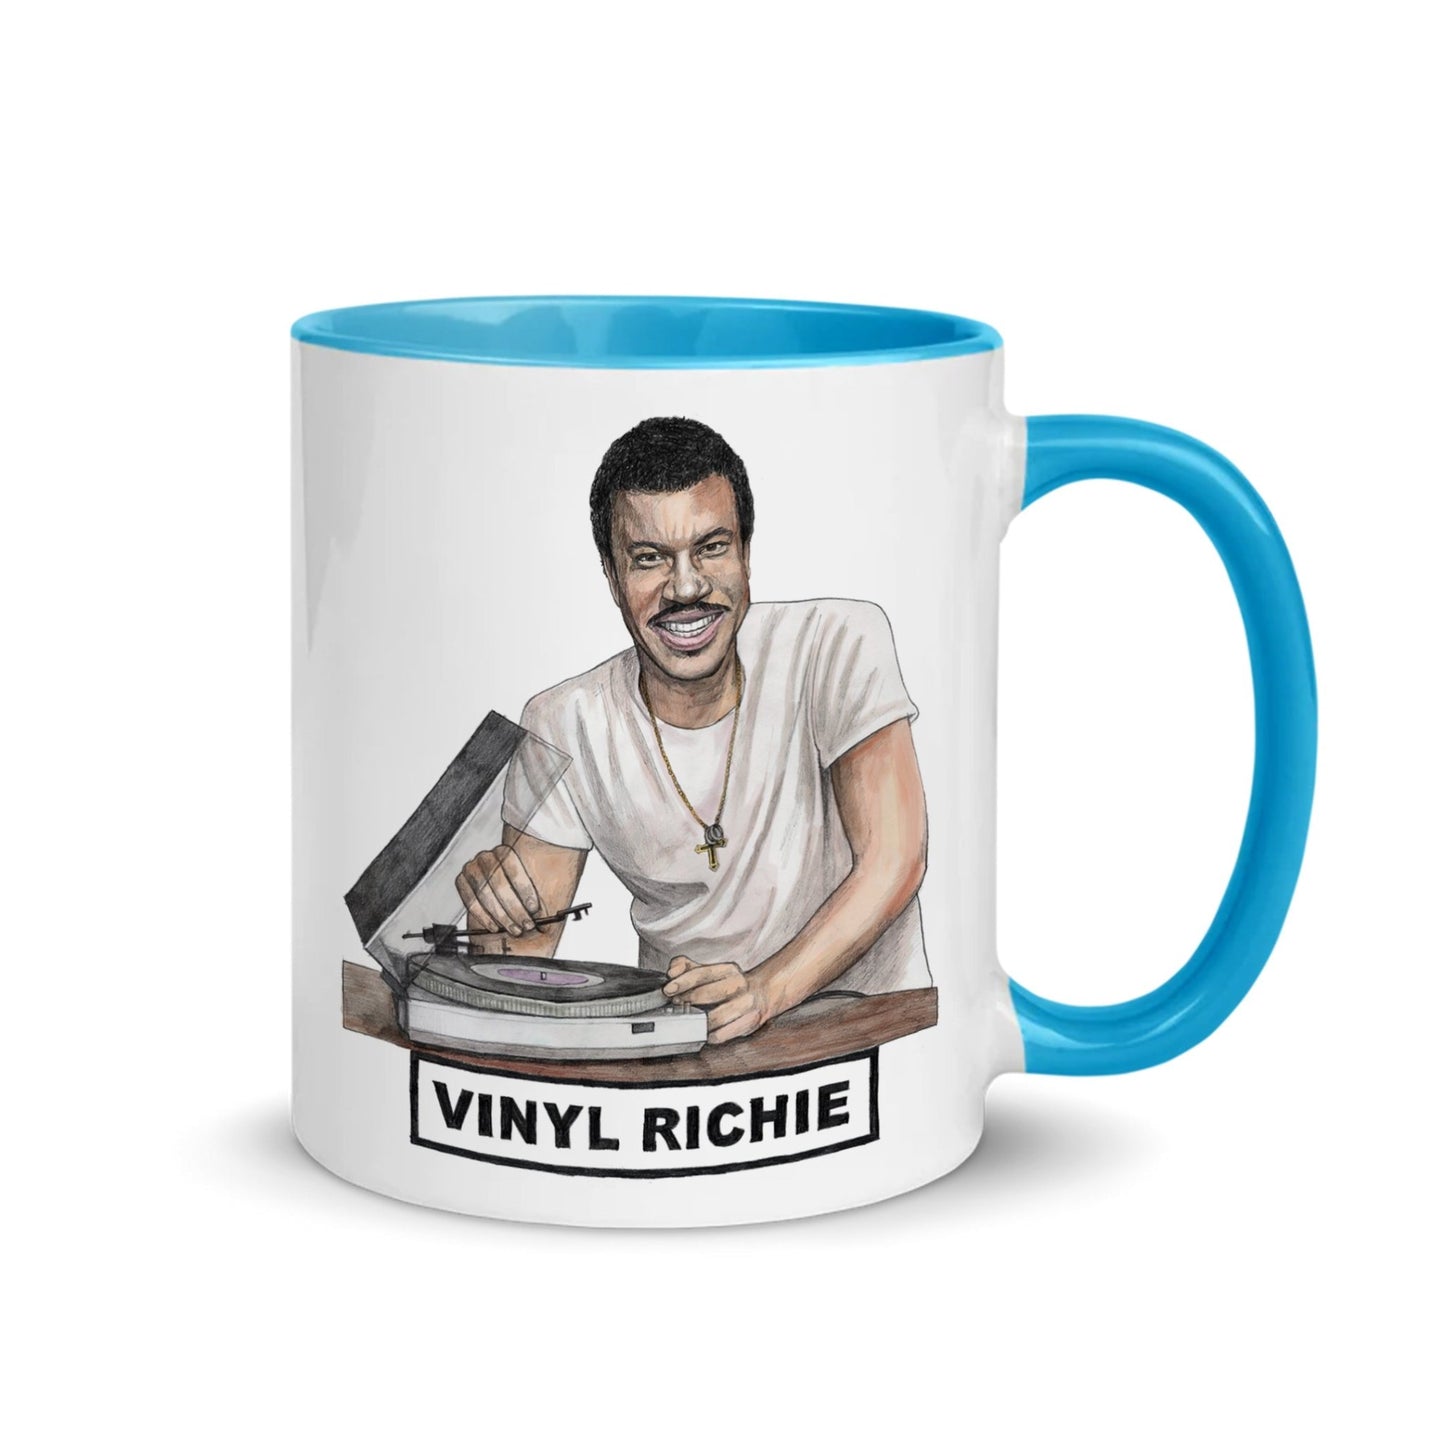 Vinyl Richie Ceramic Mug - Quite Good Cards Funny Birthday Card